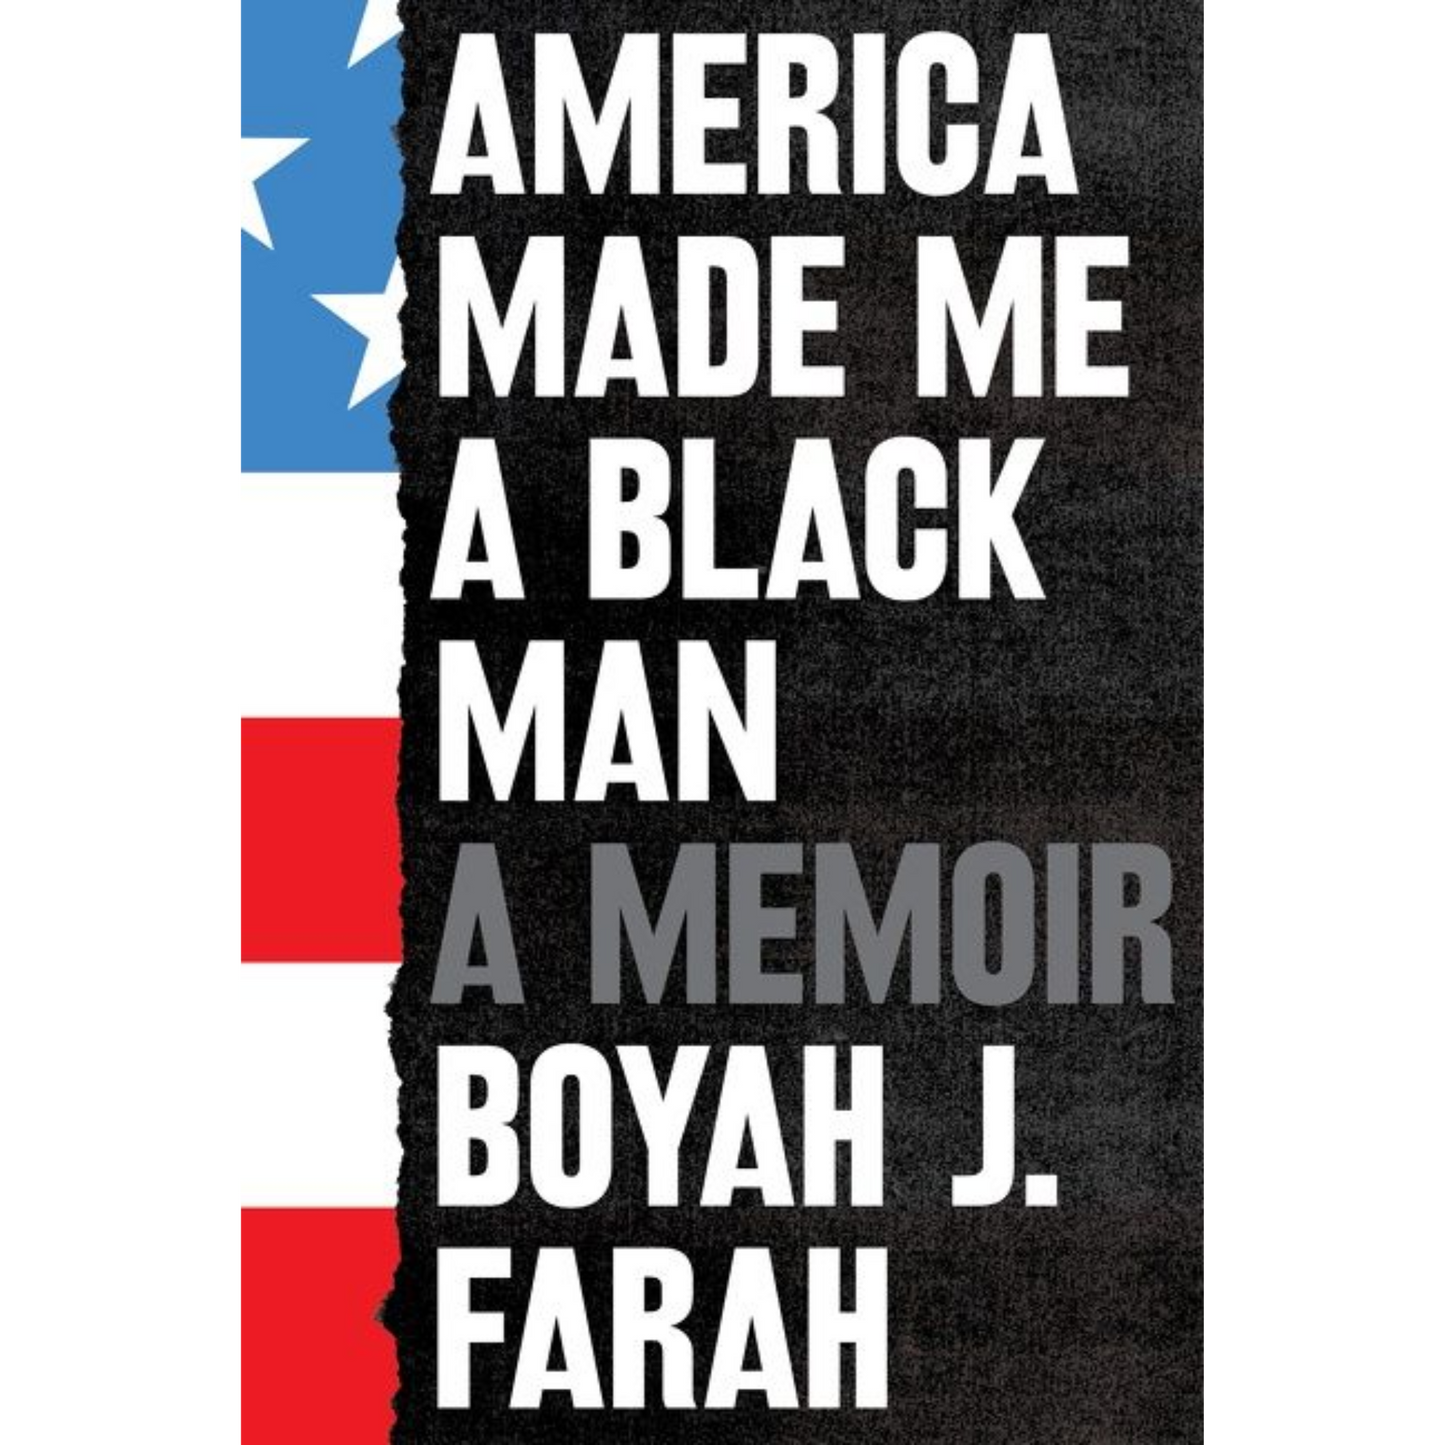 america made me a black man boyah j farah